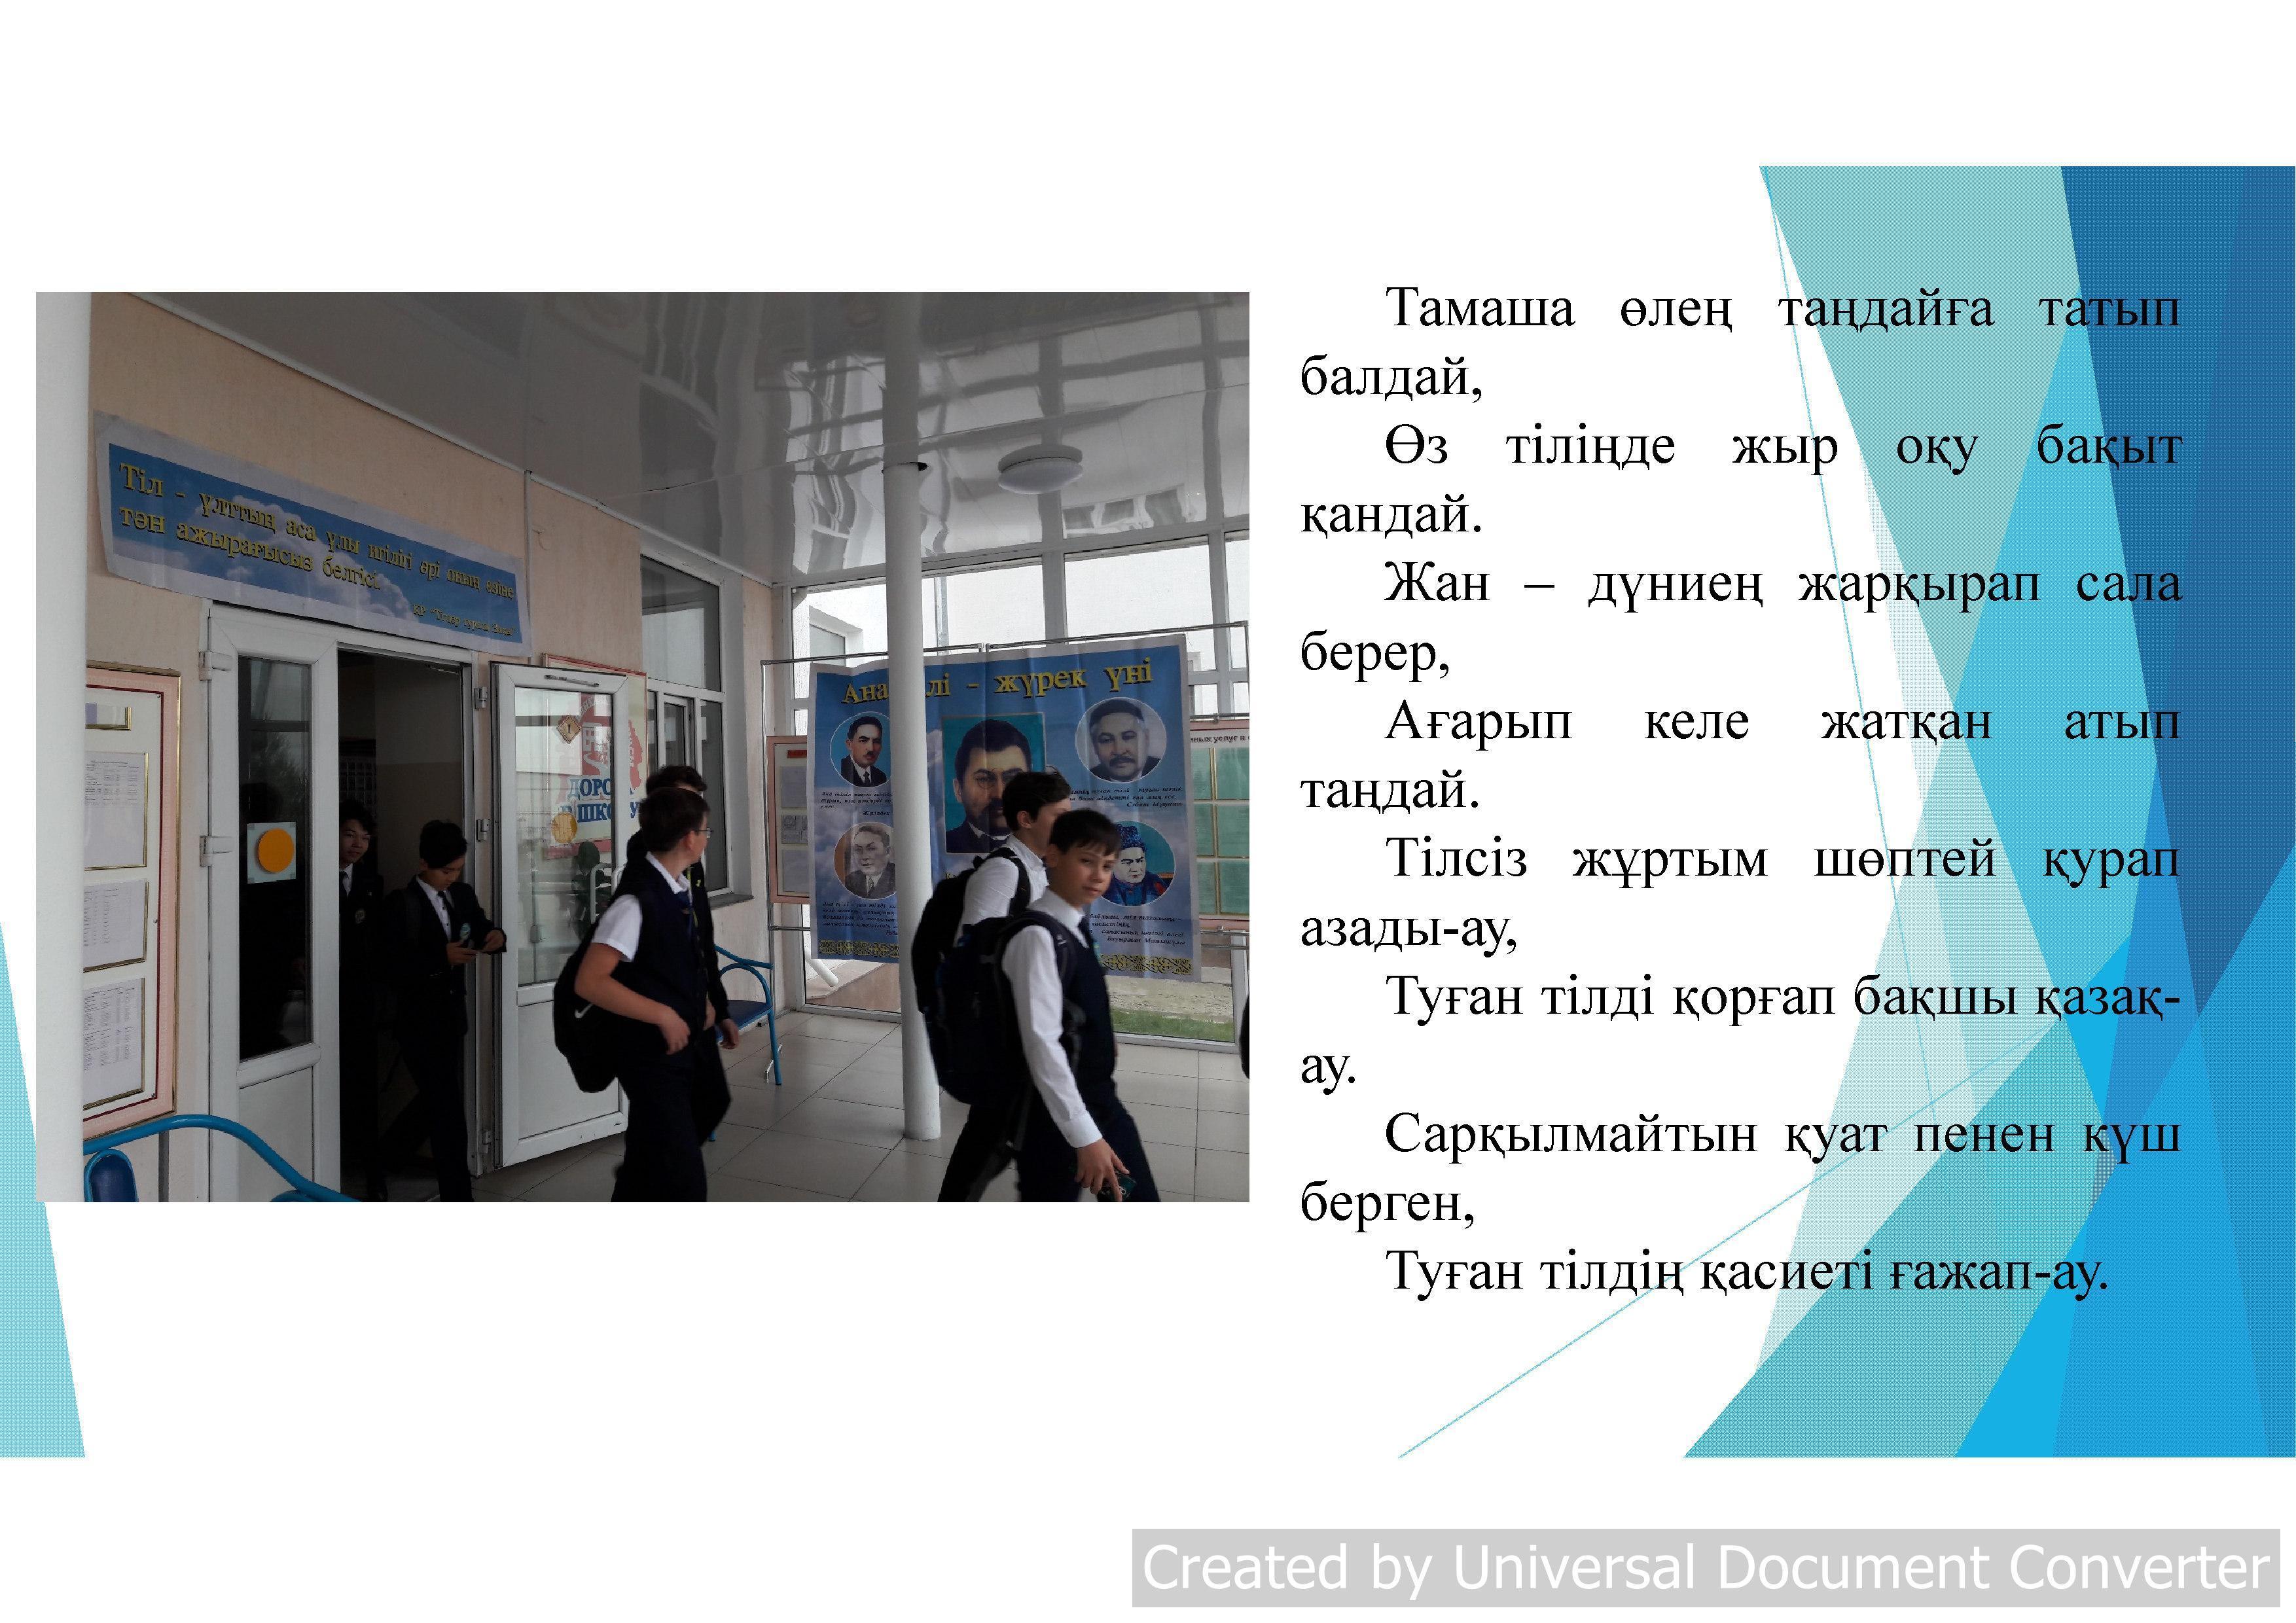 Декада казахского языка и литературы. Открытие